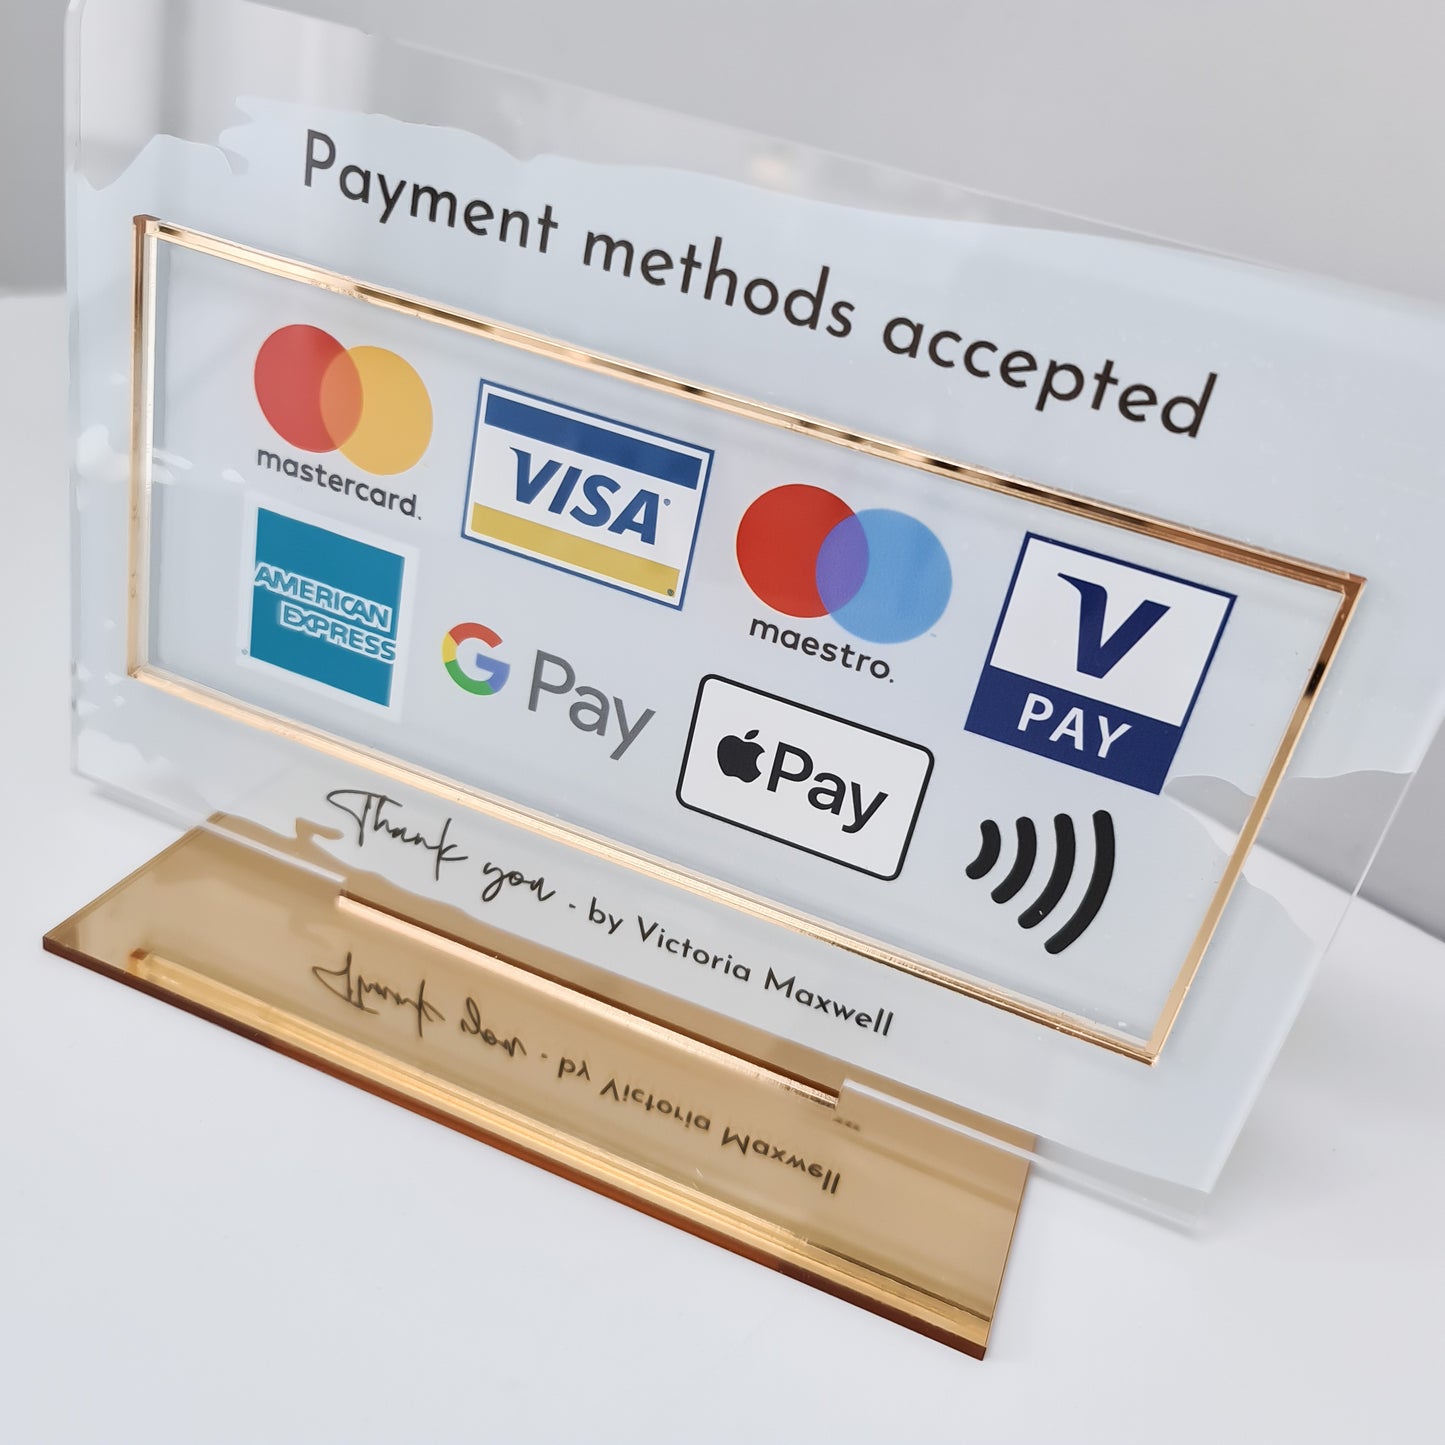 Payments Accepted Sign - V&C Designs Ltd